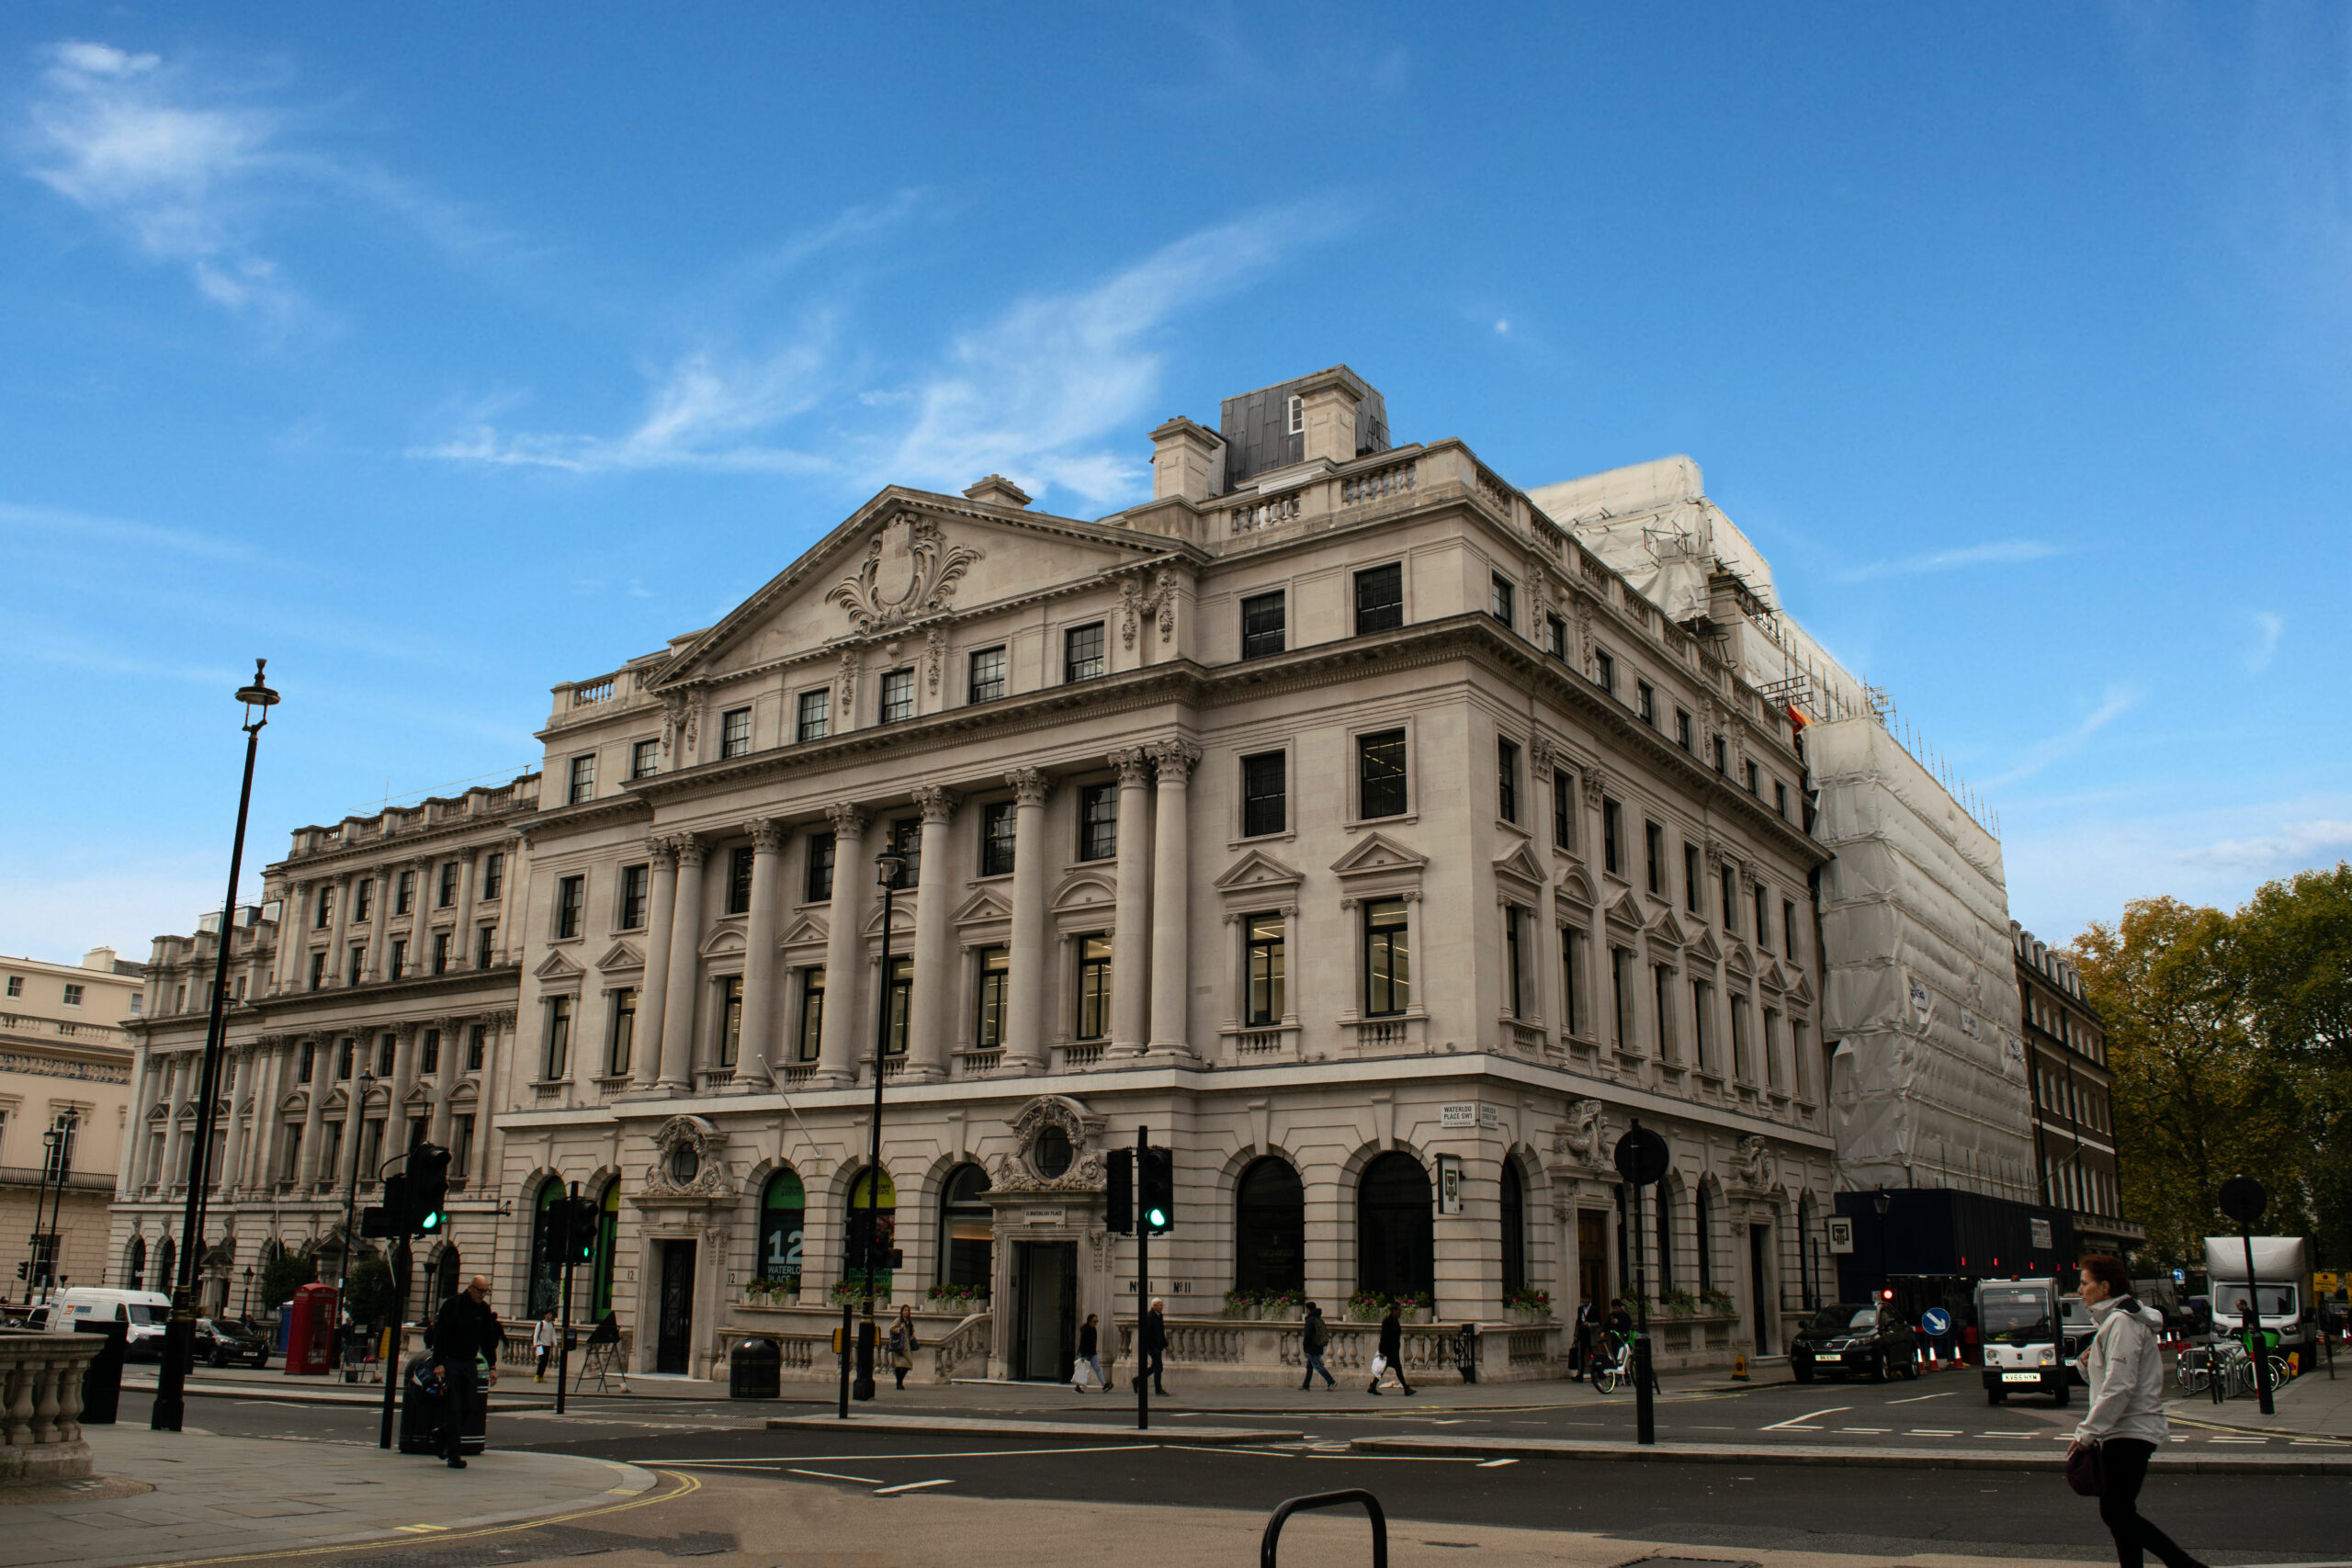 External building of 11 Waterloo Place in London